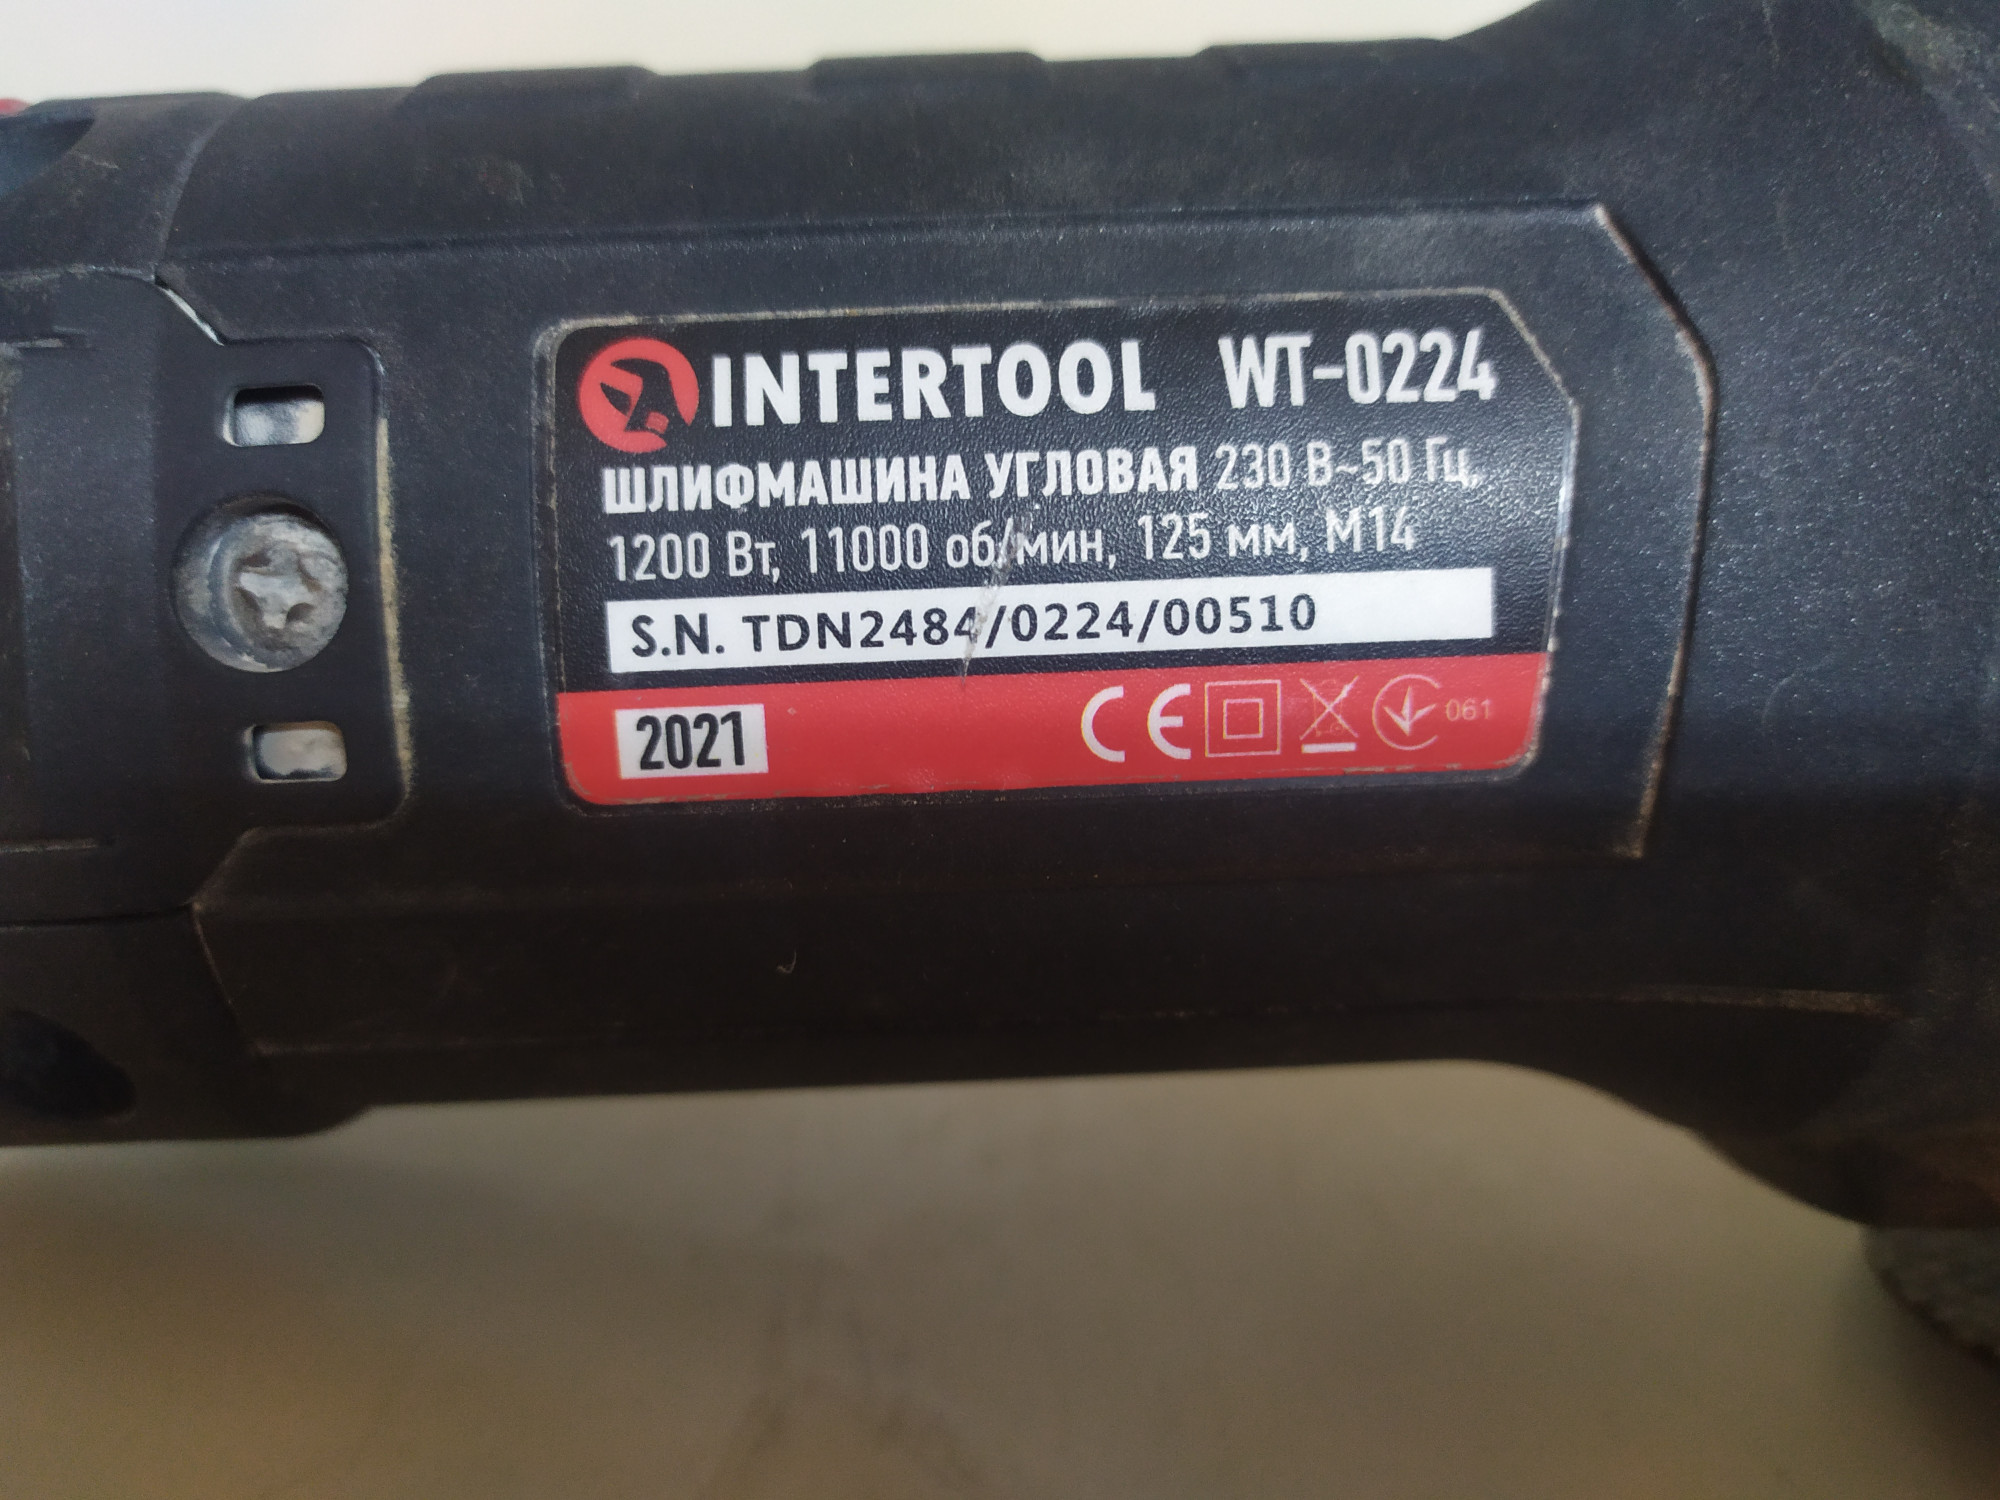 Болгарка (кутова шліфувальна машина) Intertool WT-0224 1